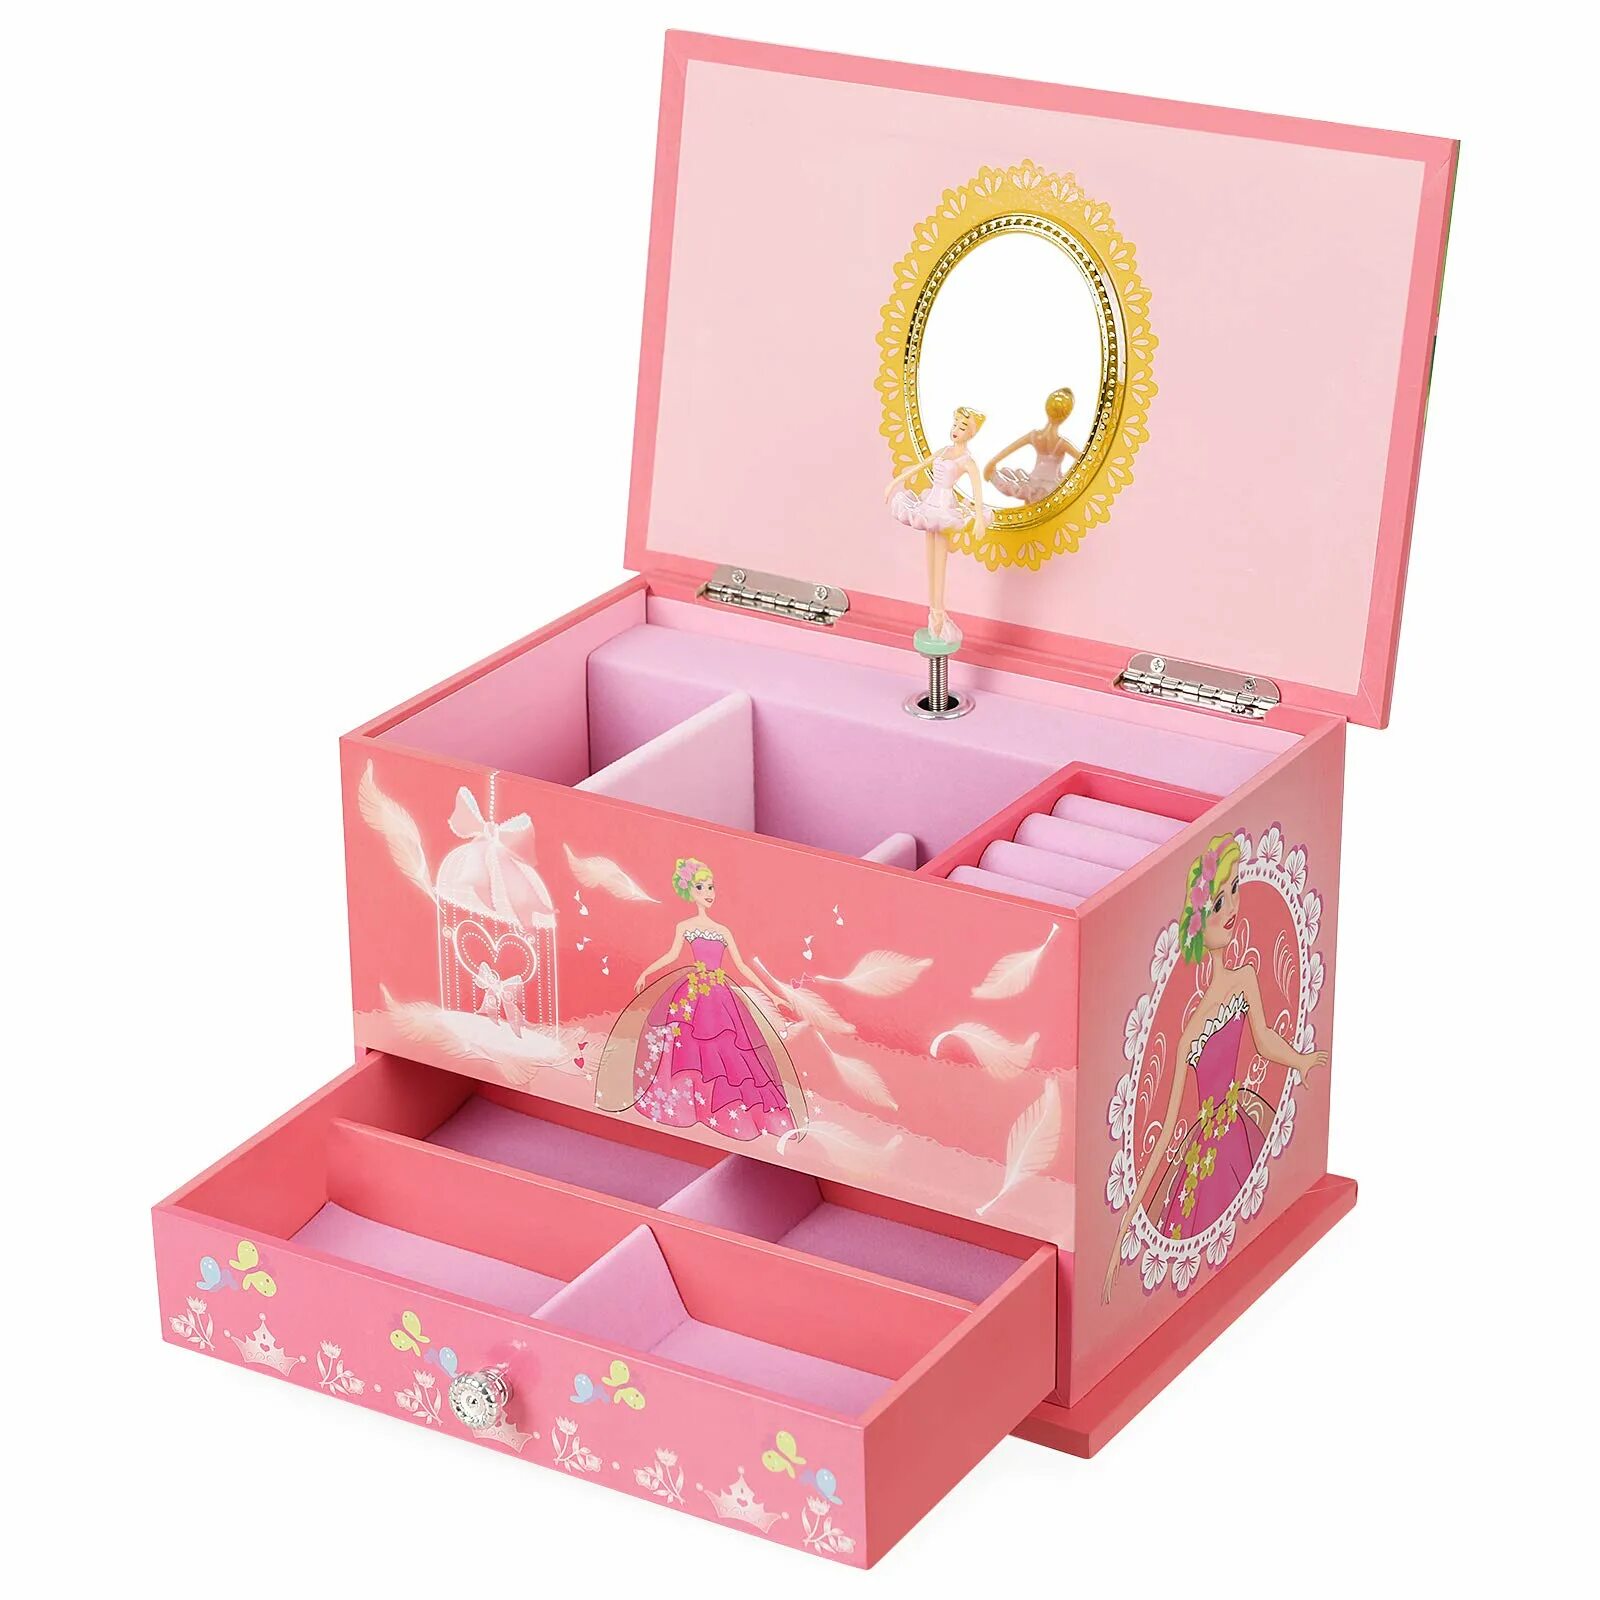 Подарок на 7 лет. Музыкальная шкатулка сундучок Musical jewerly Box Shenzhen Toys д54155. Шкатулка драгоценностей принцессы Princess Jewel Box. Lero Kids детская музыкальная шкатулка принцесса/Pink. Шкатулка для украшений для девочки музыкальная.